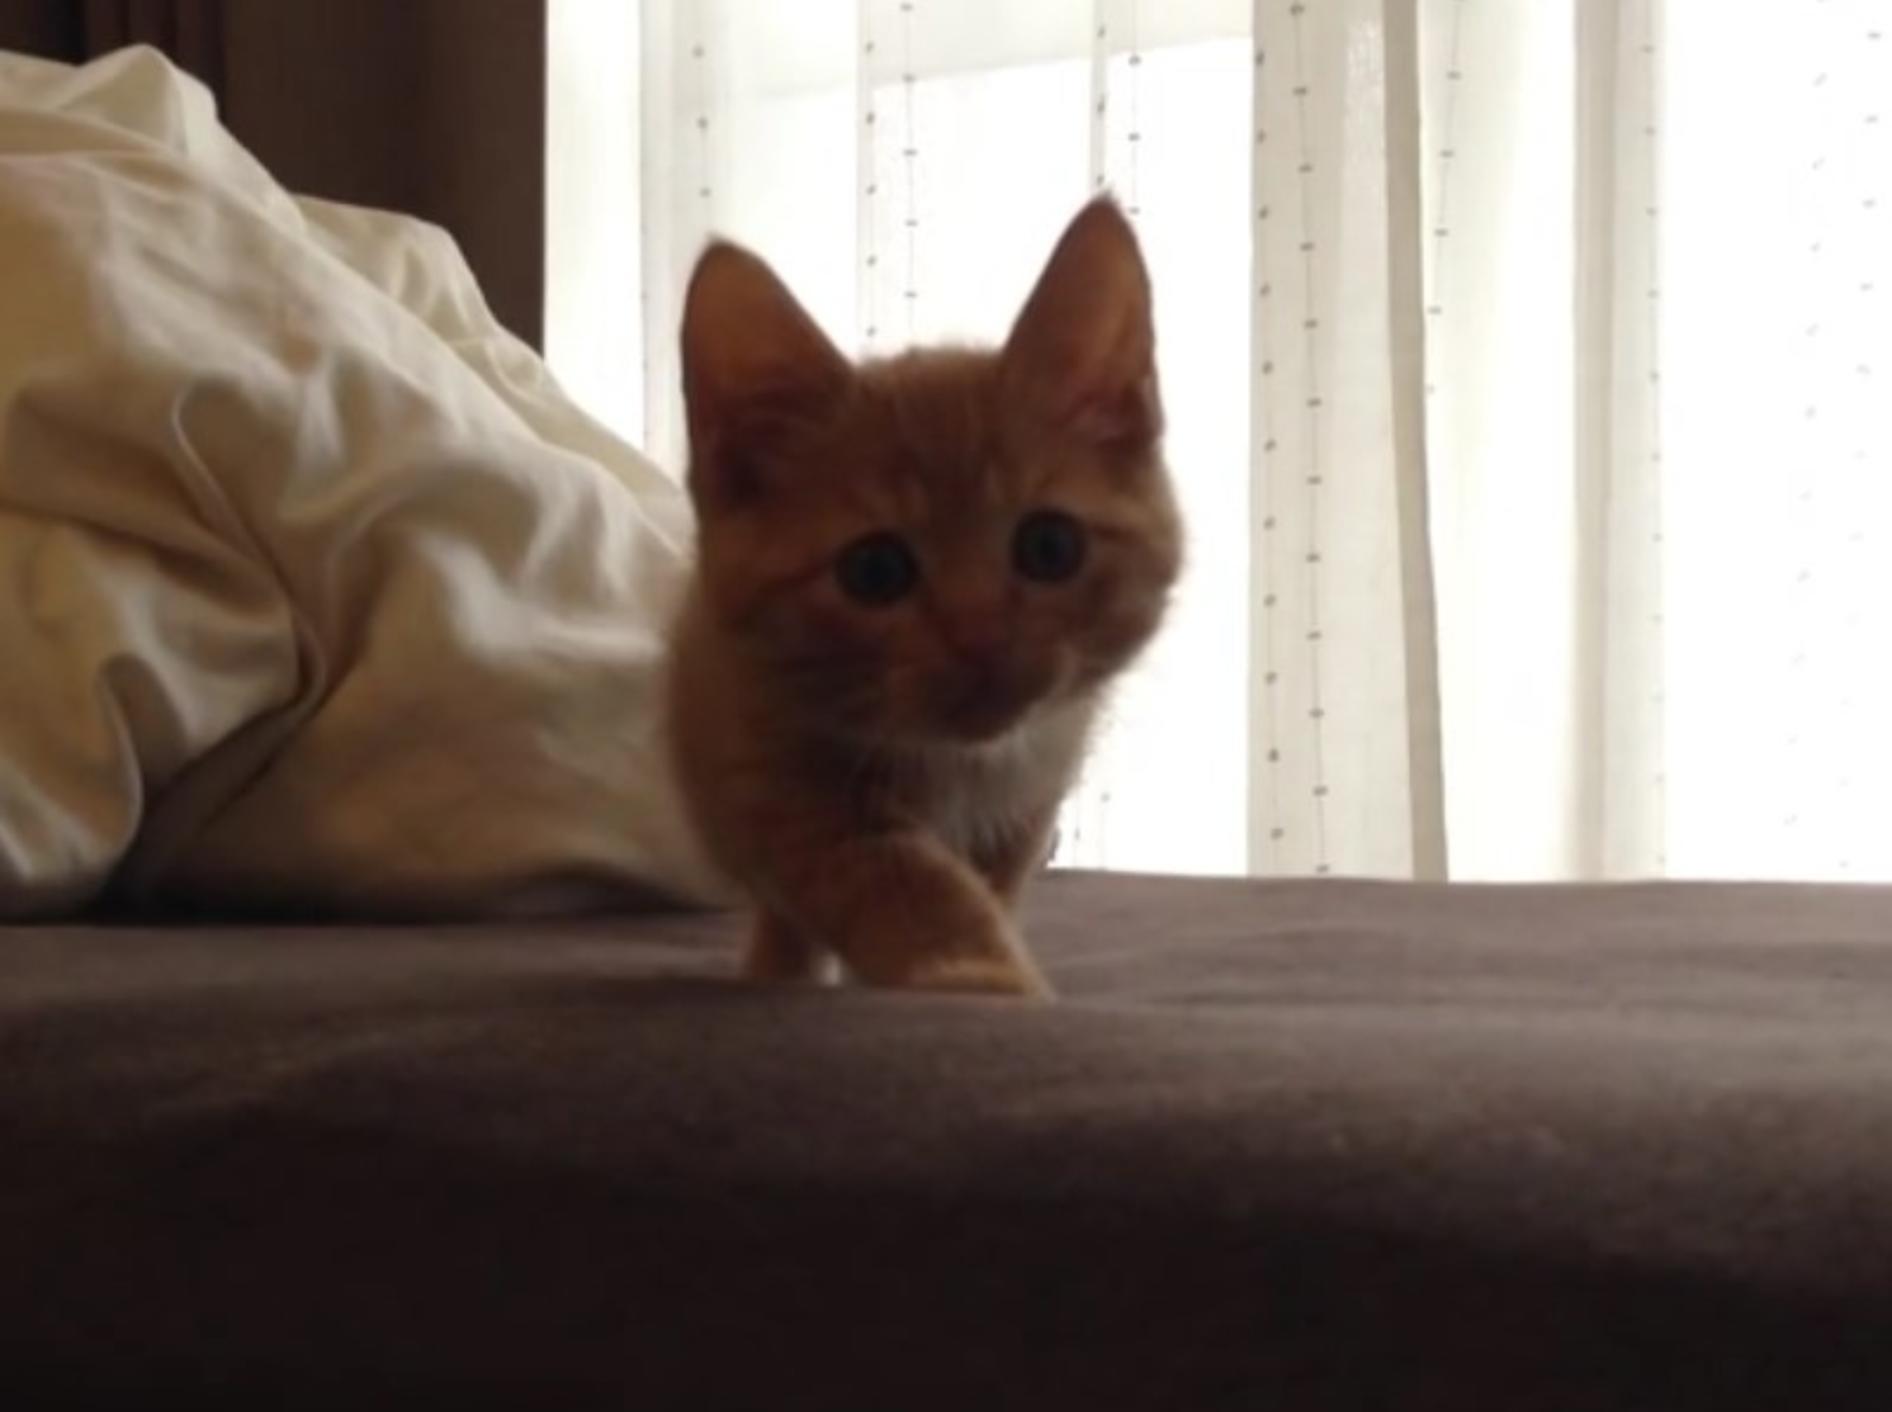 Hiroshi übt das Jagen auf dem Bett – und stellt sich gut dabei an! – YouTube / Tabby Cat Hiroshi